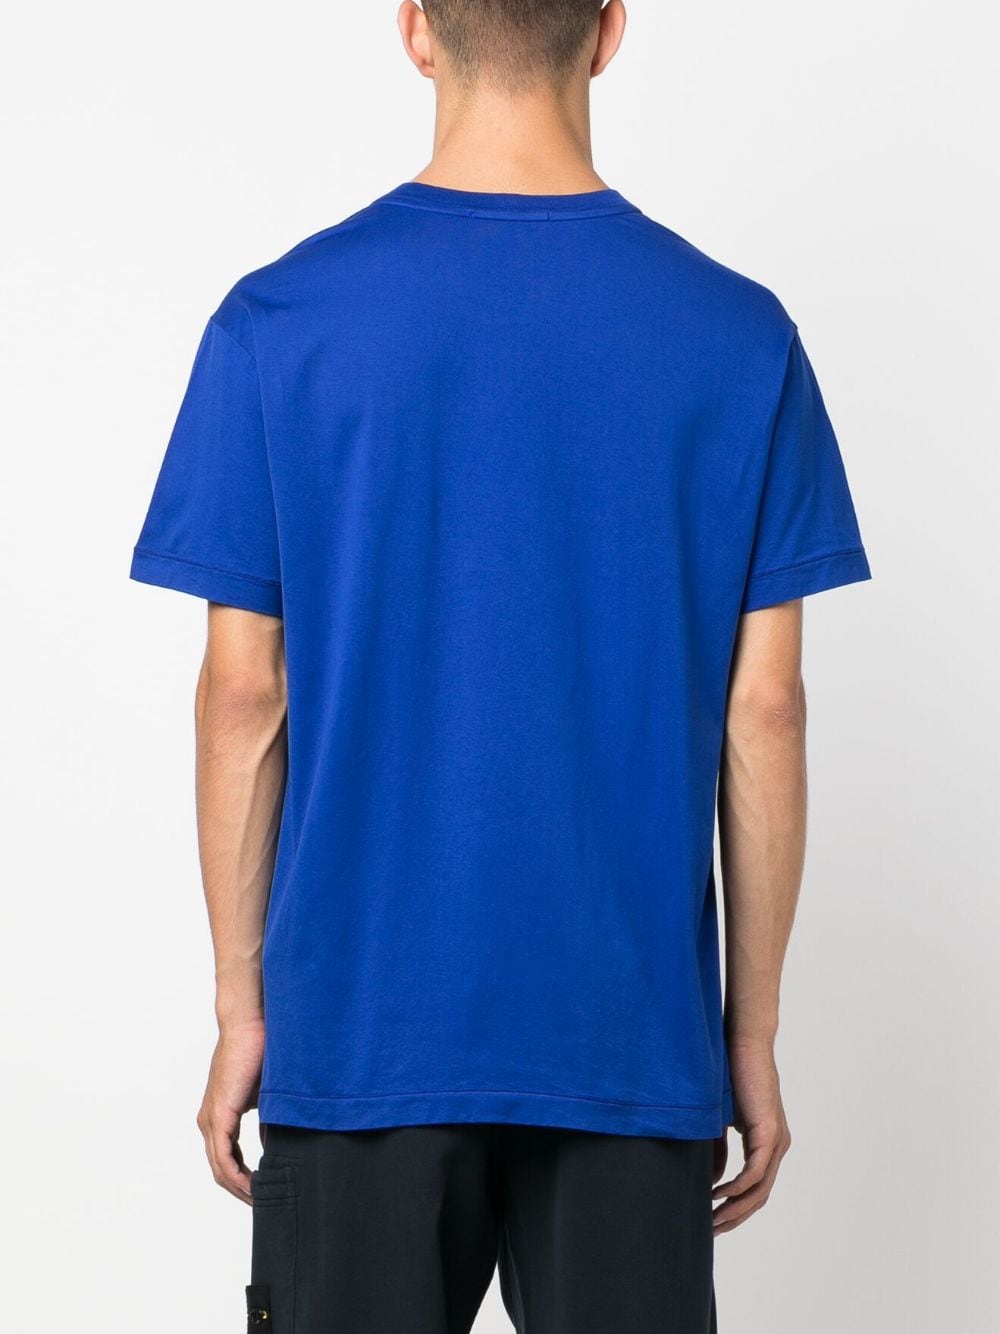 Stone Island T-shirt 24113 Bright Blue - Lothaire